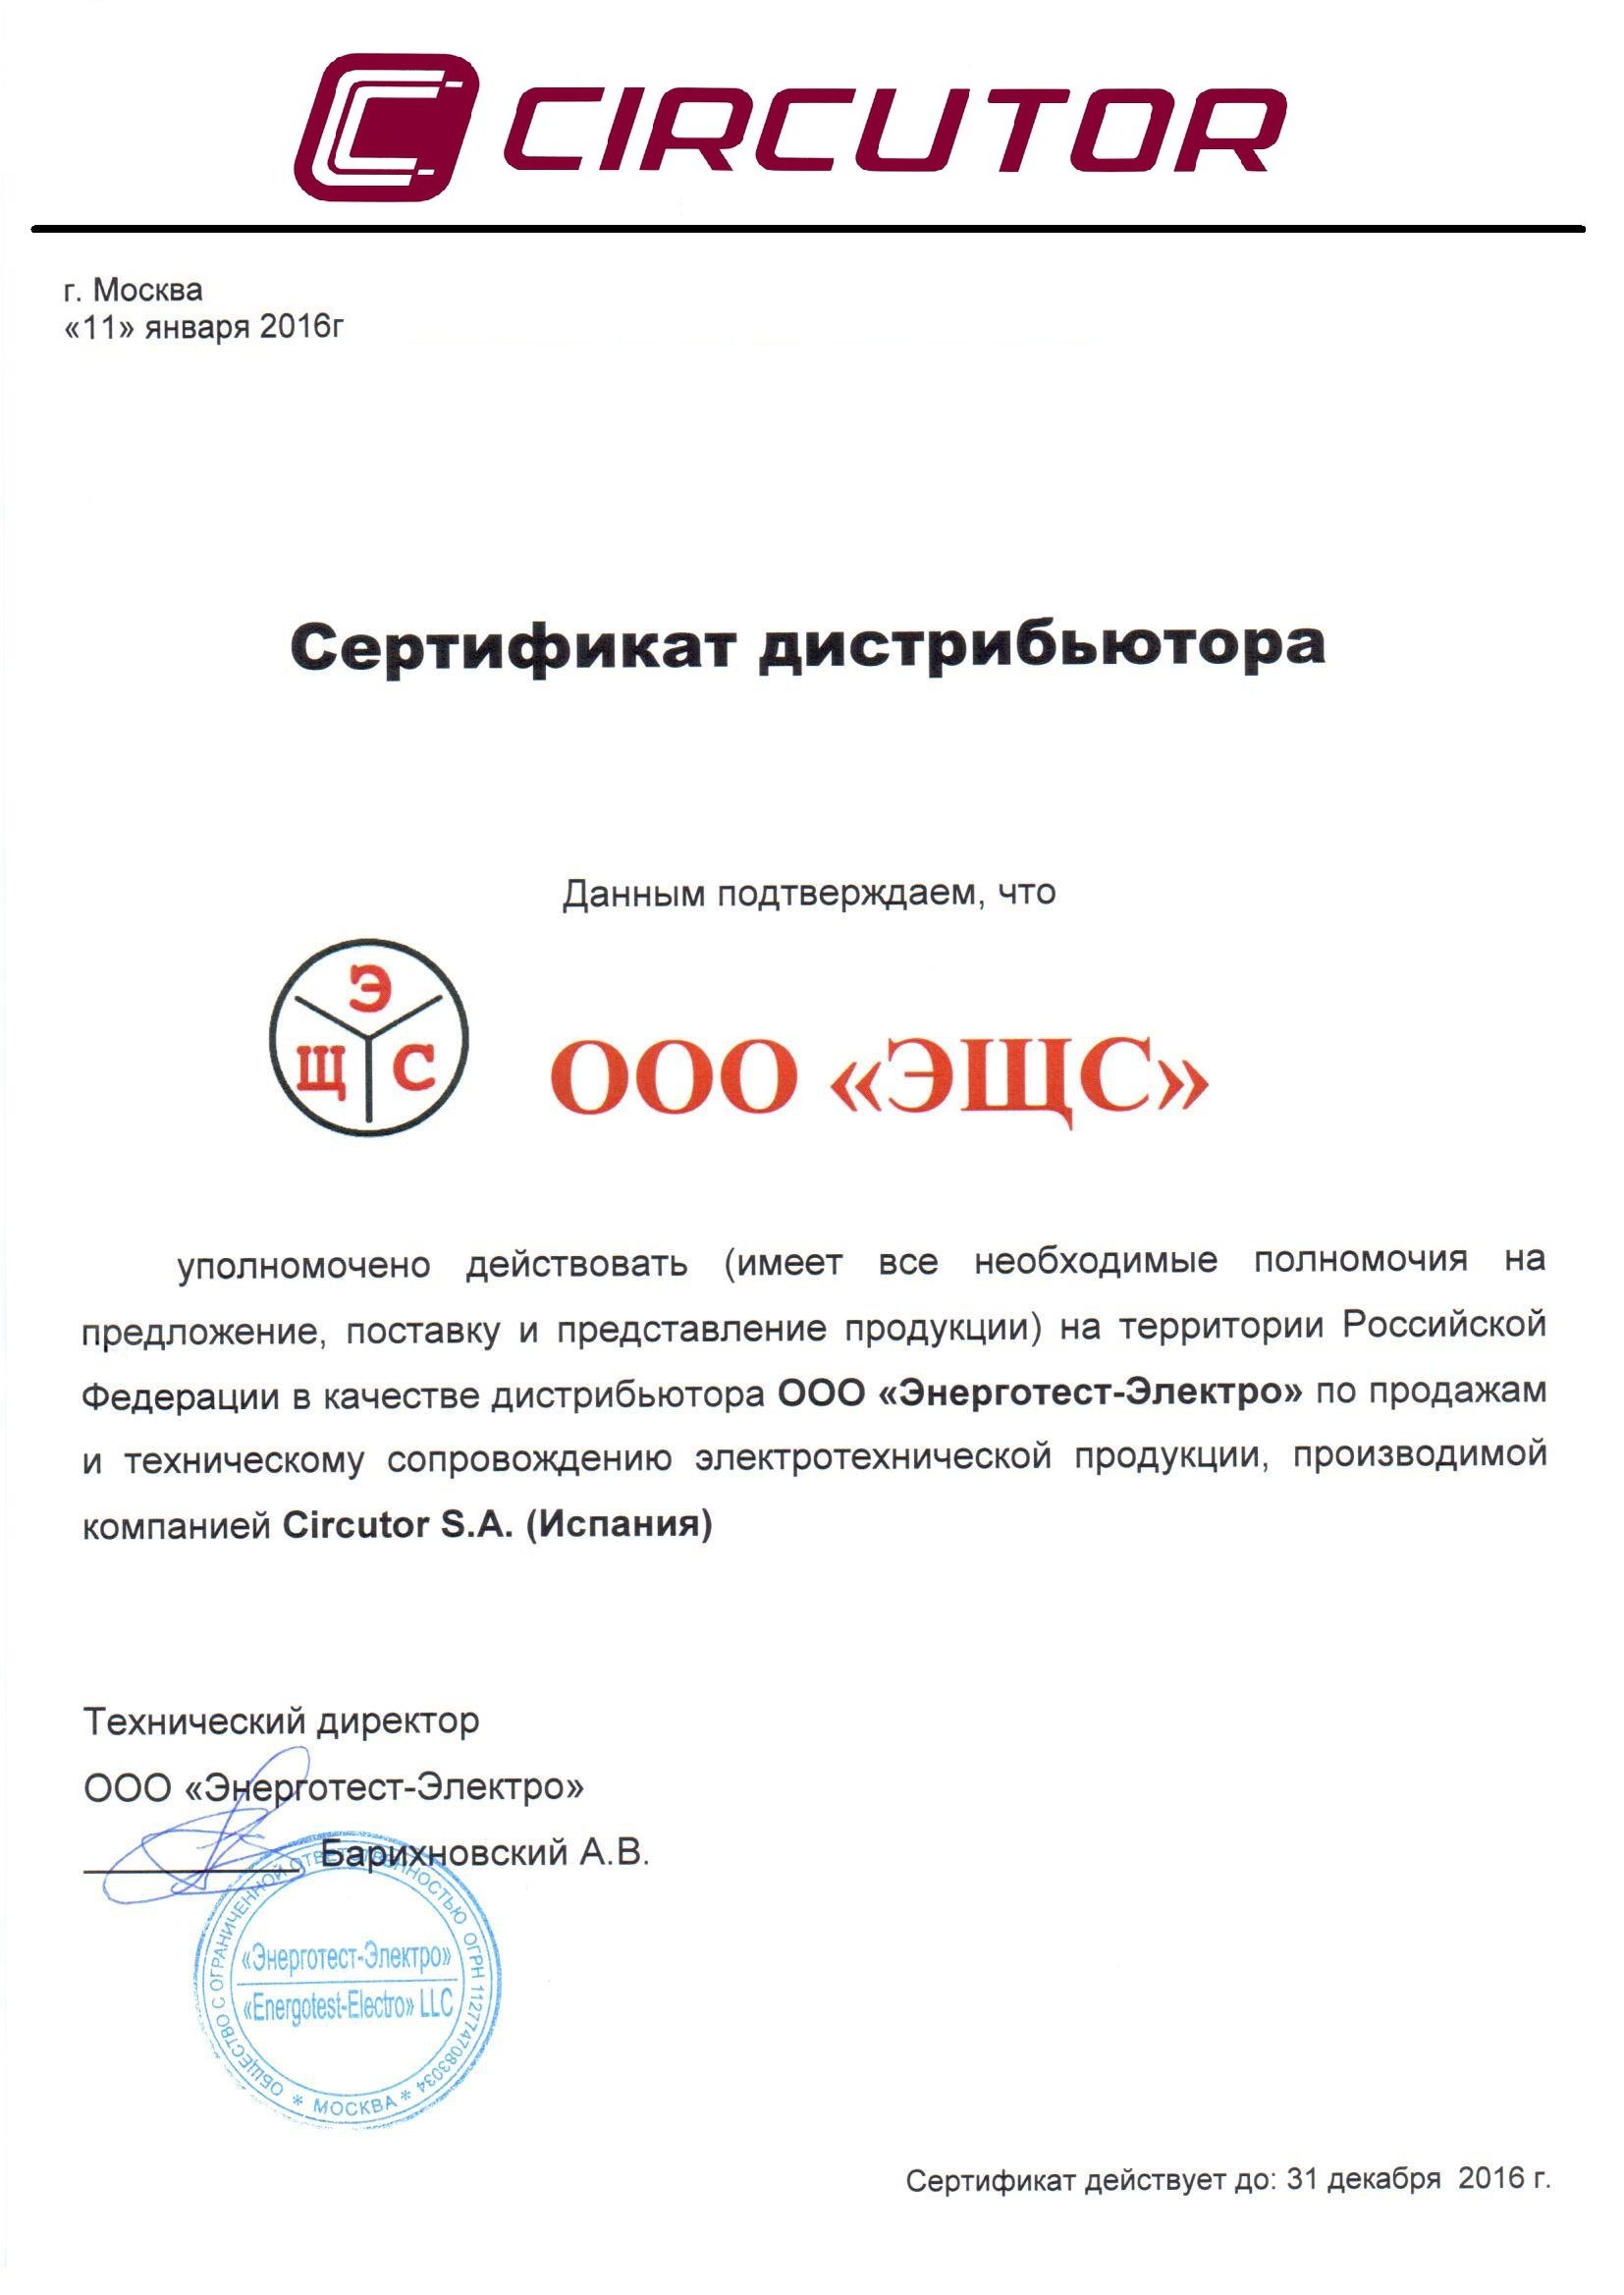 Сертификат дистрибьютора Circutor